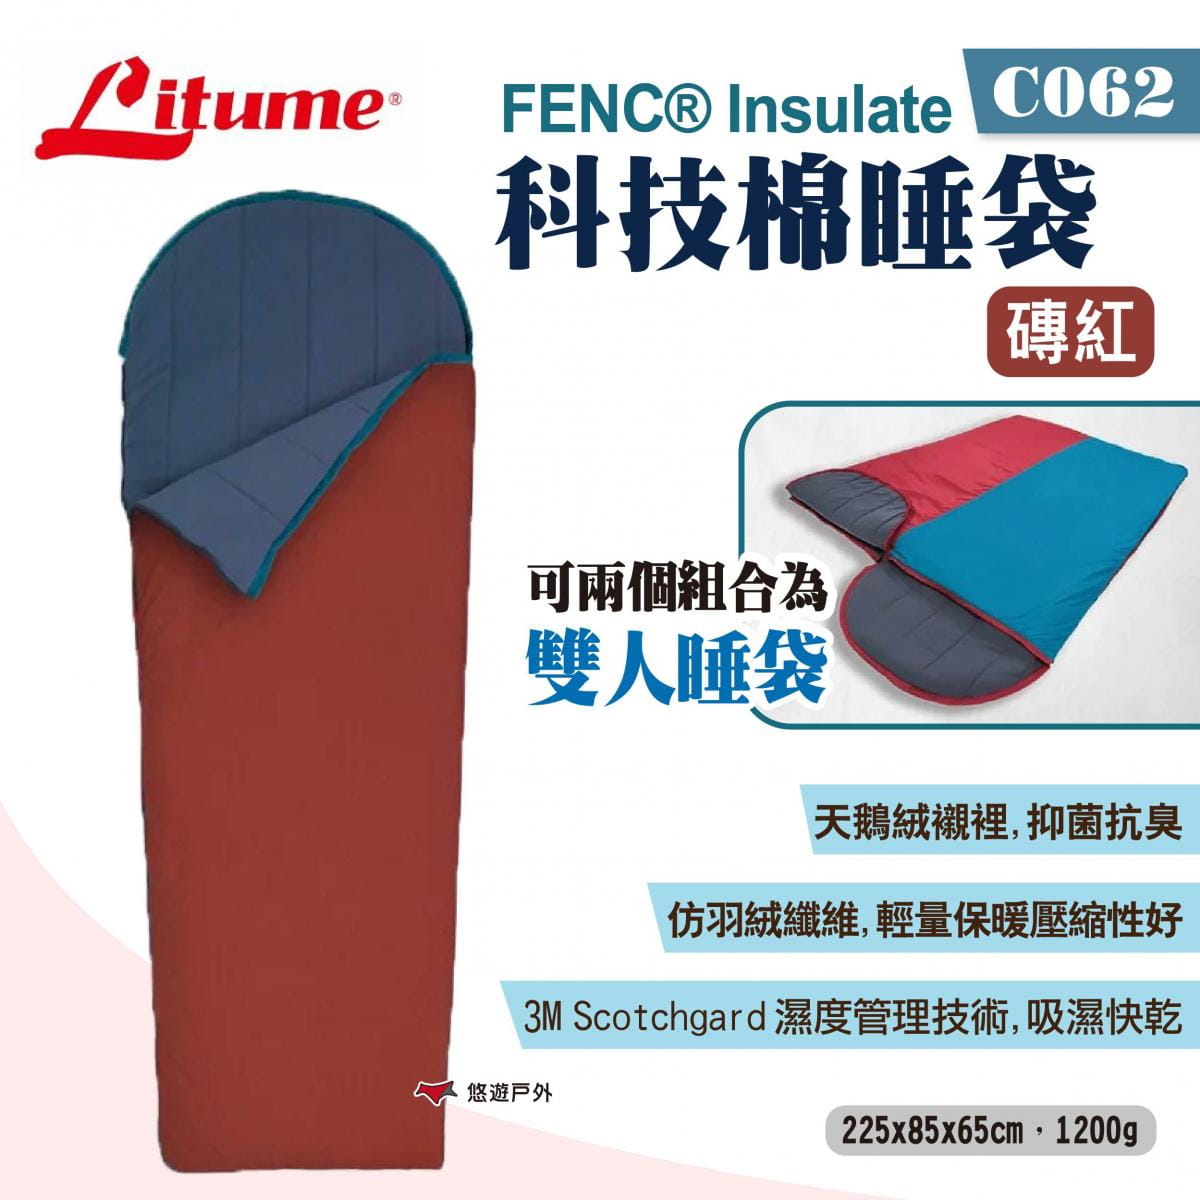 【LITUME】意都美 FENC® Insulate 科技棉睡袋 C062磚紅 悠遊戶外 1